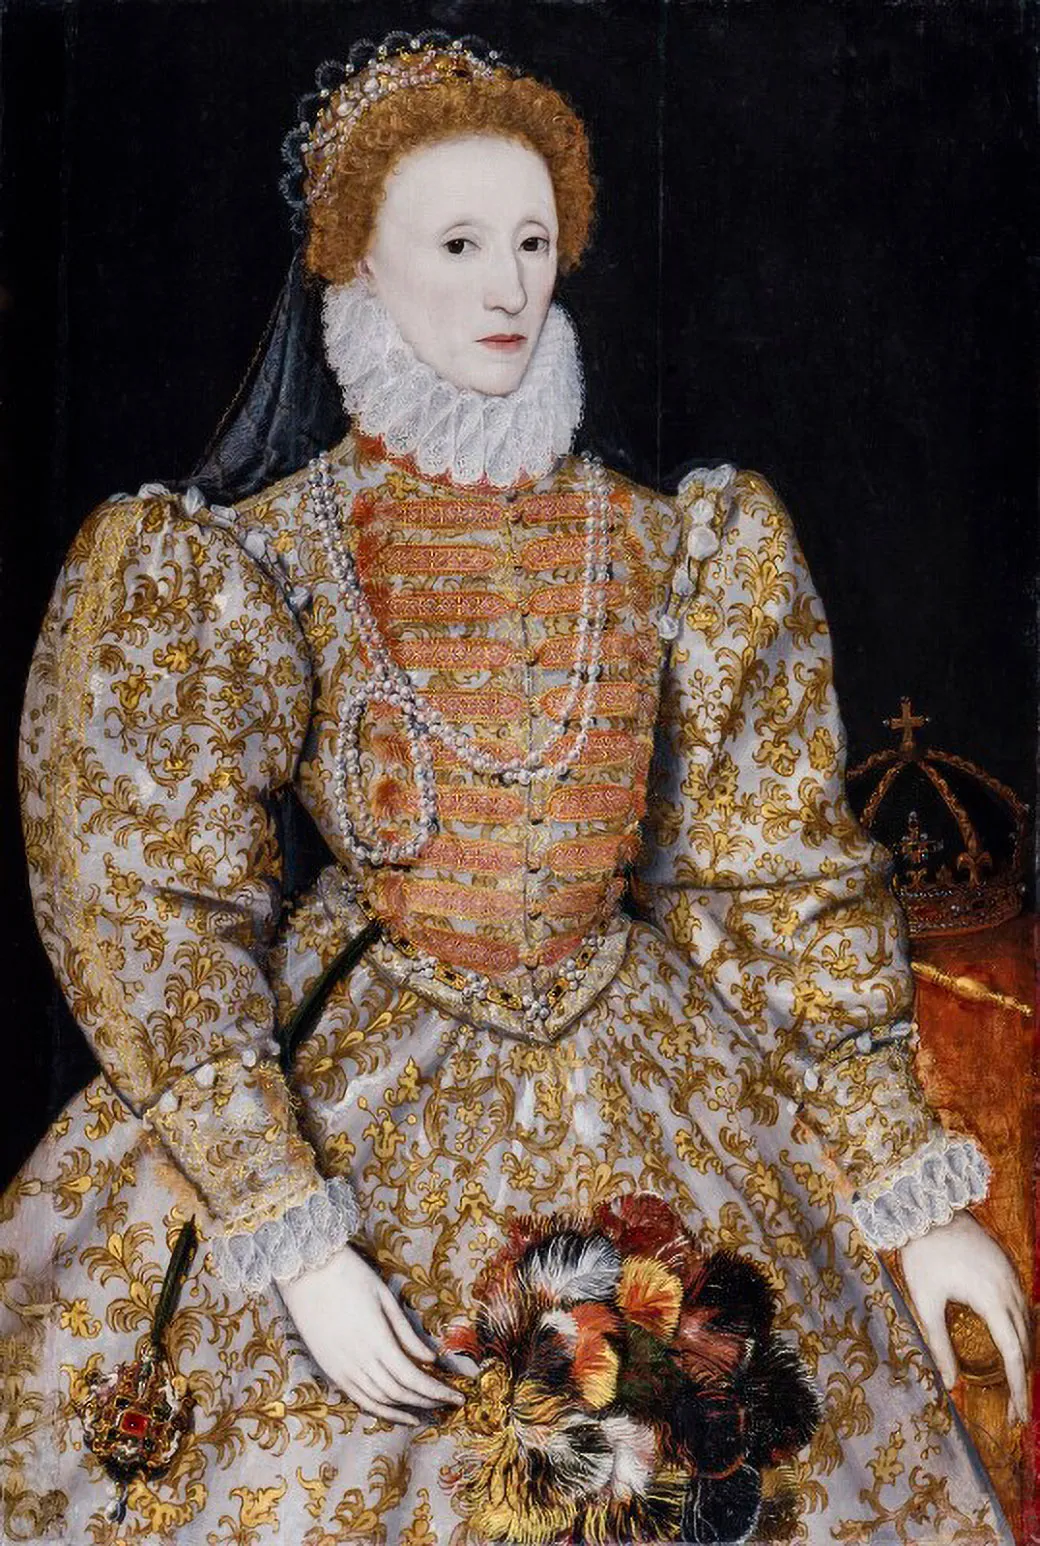 Unknown artist, The Darnley Portrait, circa 1575